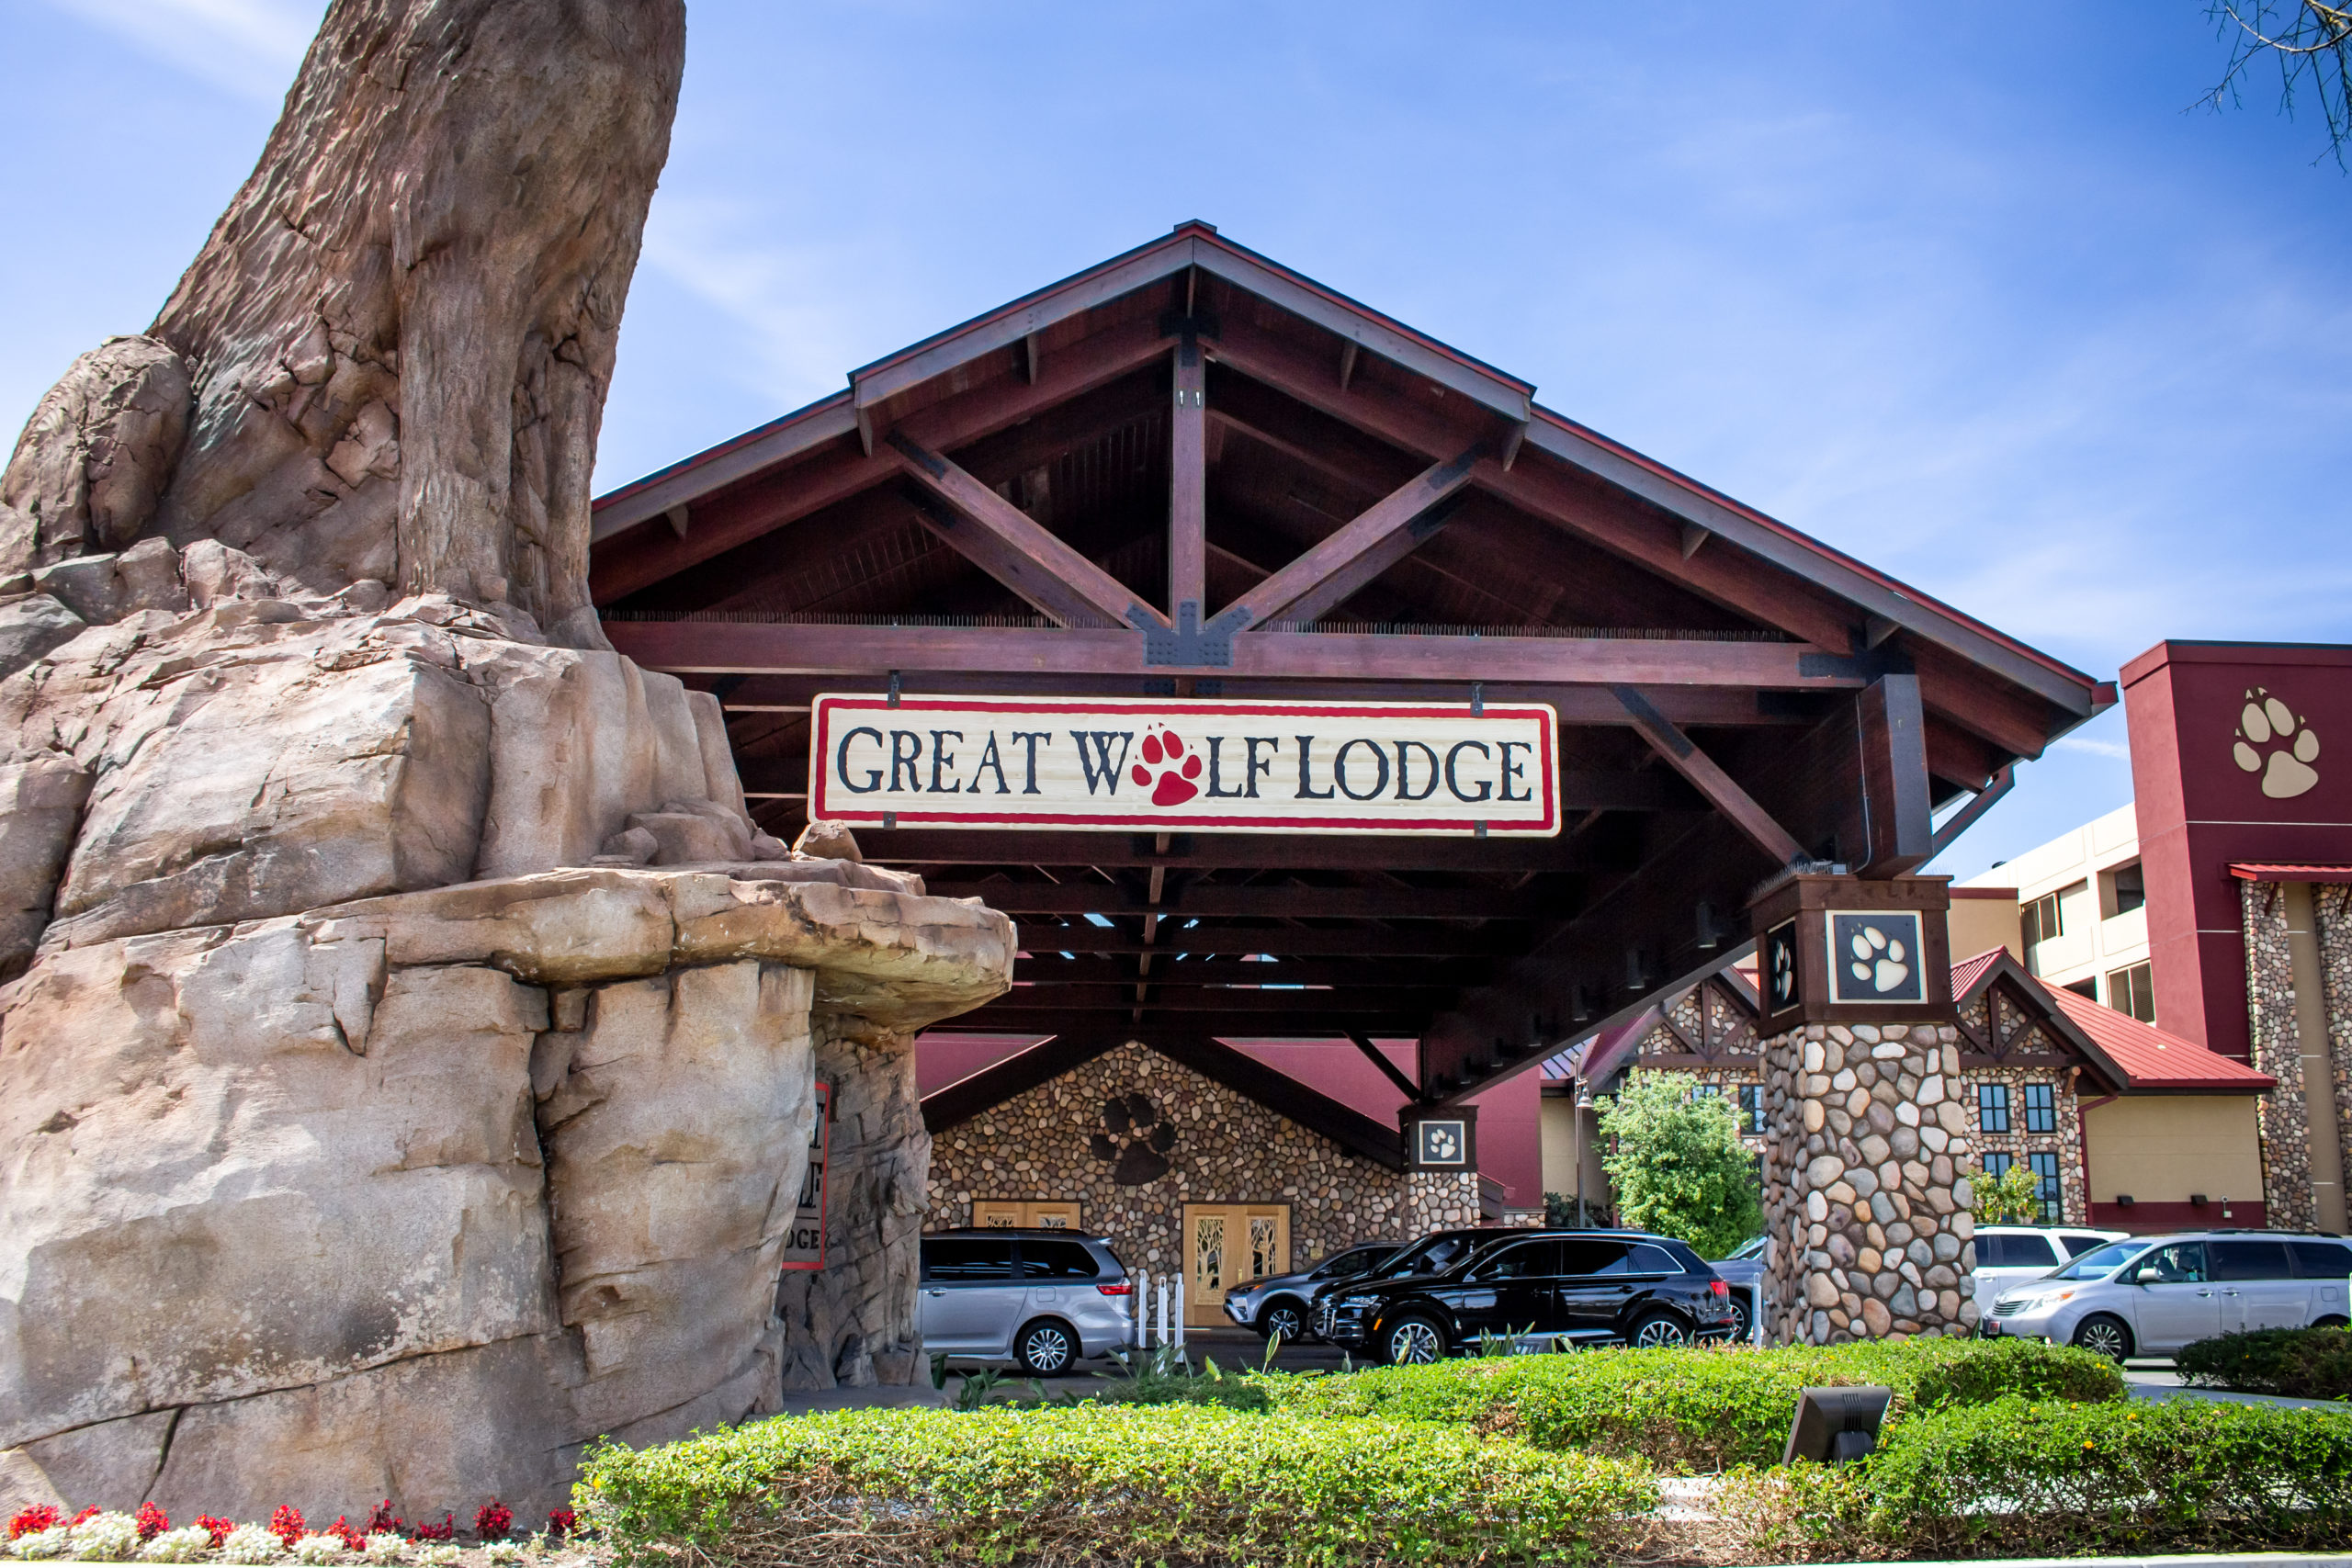 Great wolf lodge save money